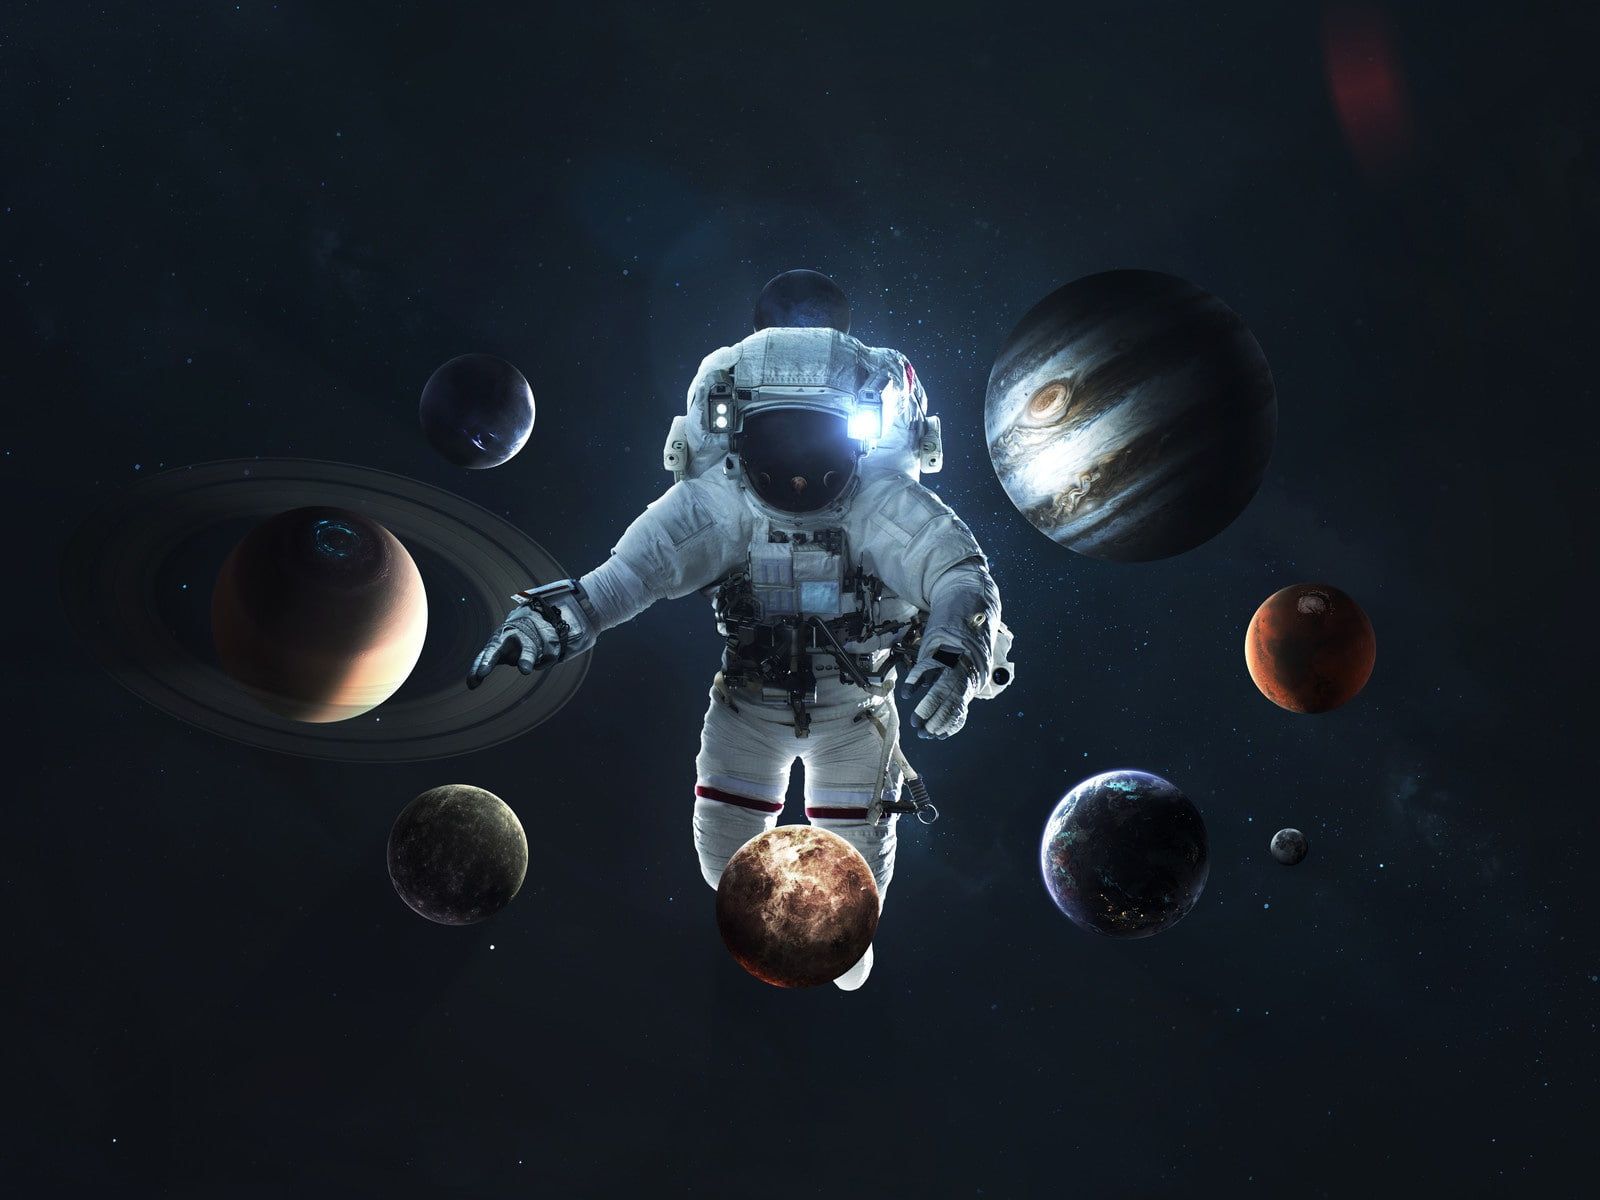 Saturn wallpaper, The moon, Space, Earth, Planet, Astronaut, Mars, Jupiter • Wallpaper For You HD Wallpaper For Desktop & Mobile